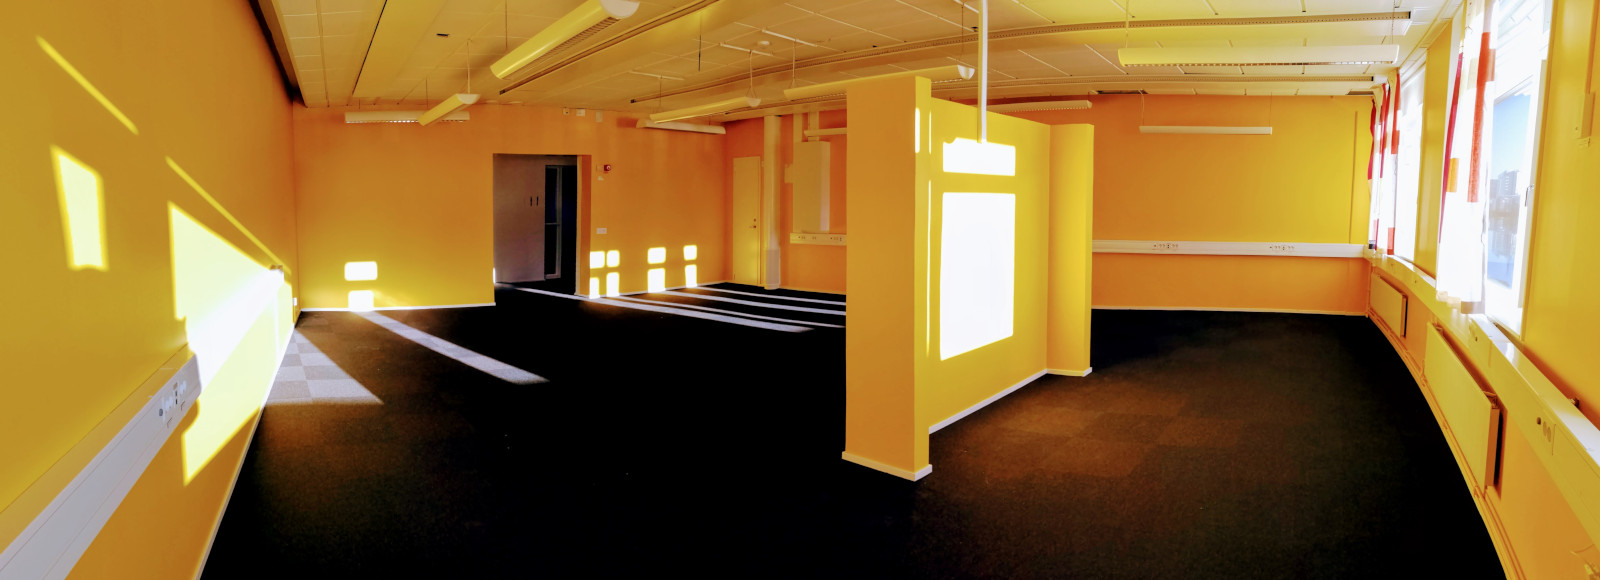 Yellow Room, Biglee, Jönköping International Business School